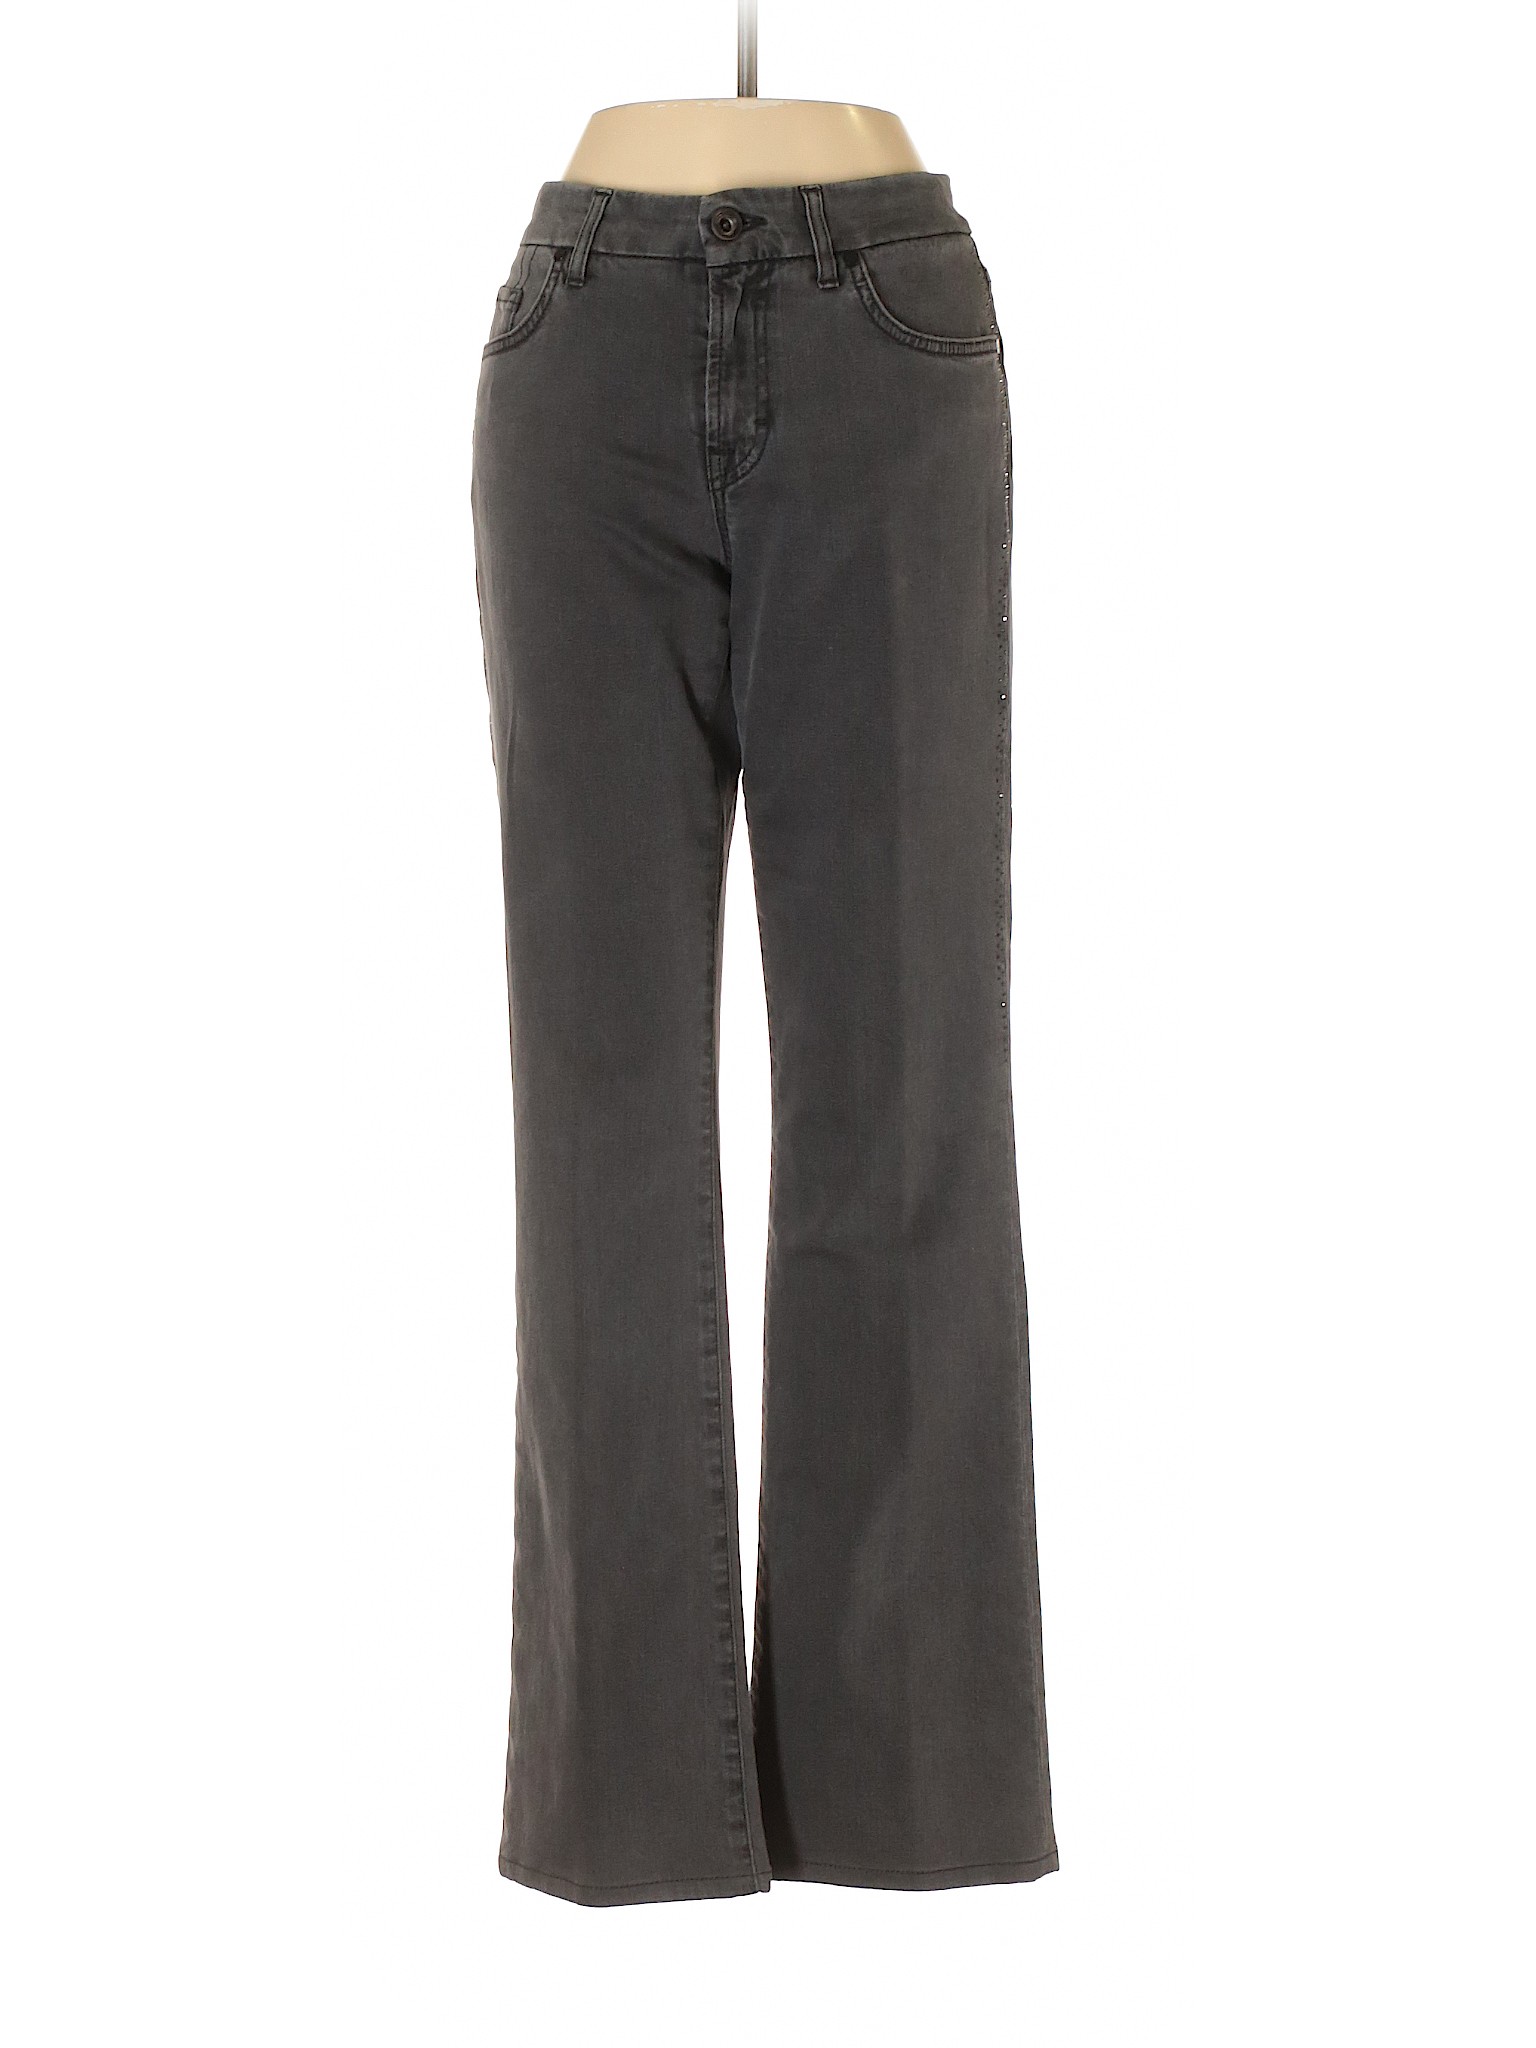 Escada Solid Gray Jeans Size 36 (EU) - 97% off | thredUP